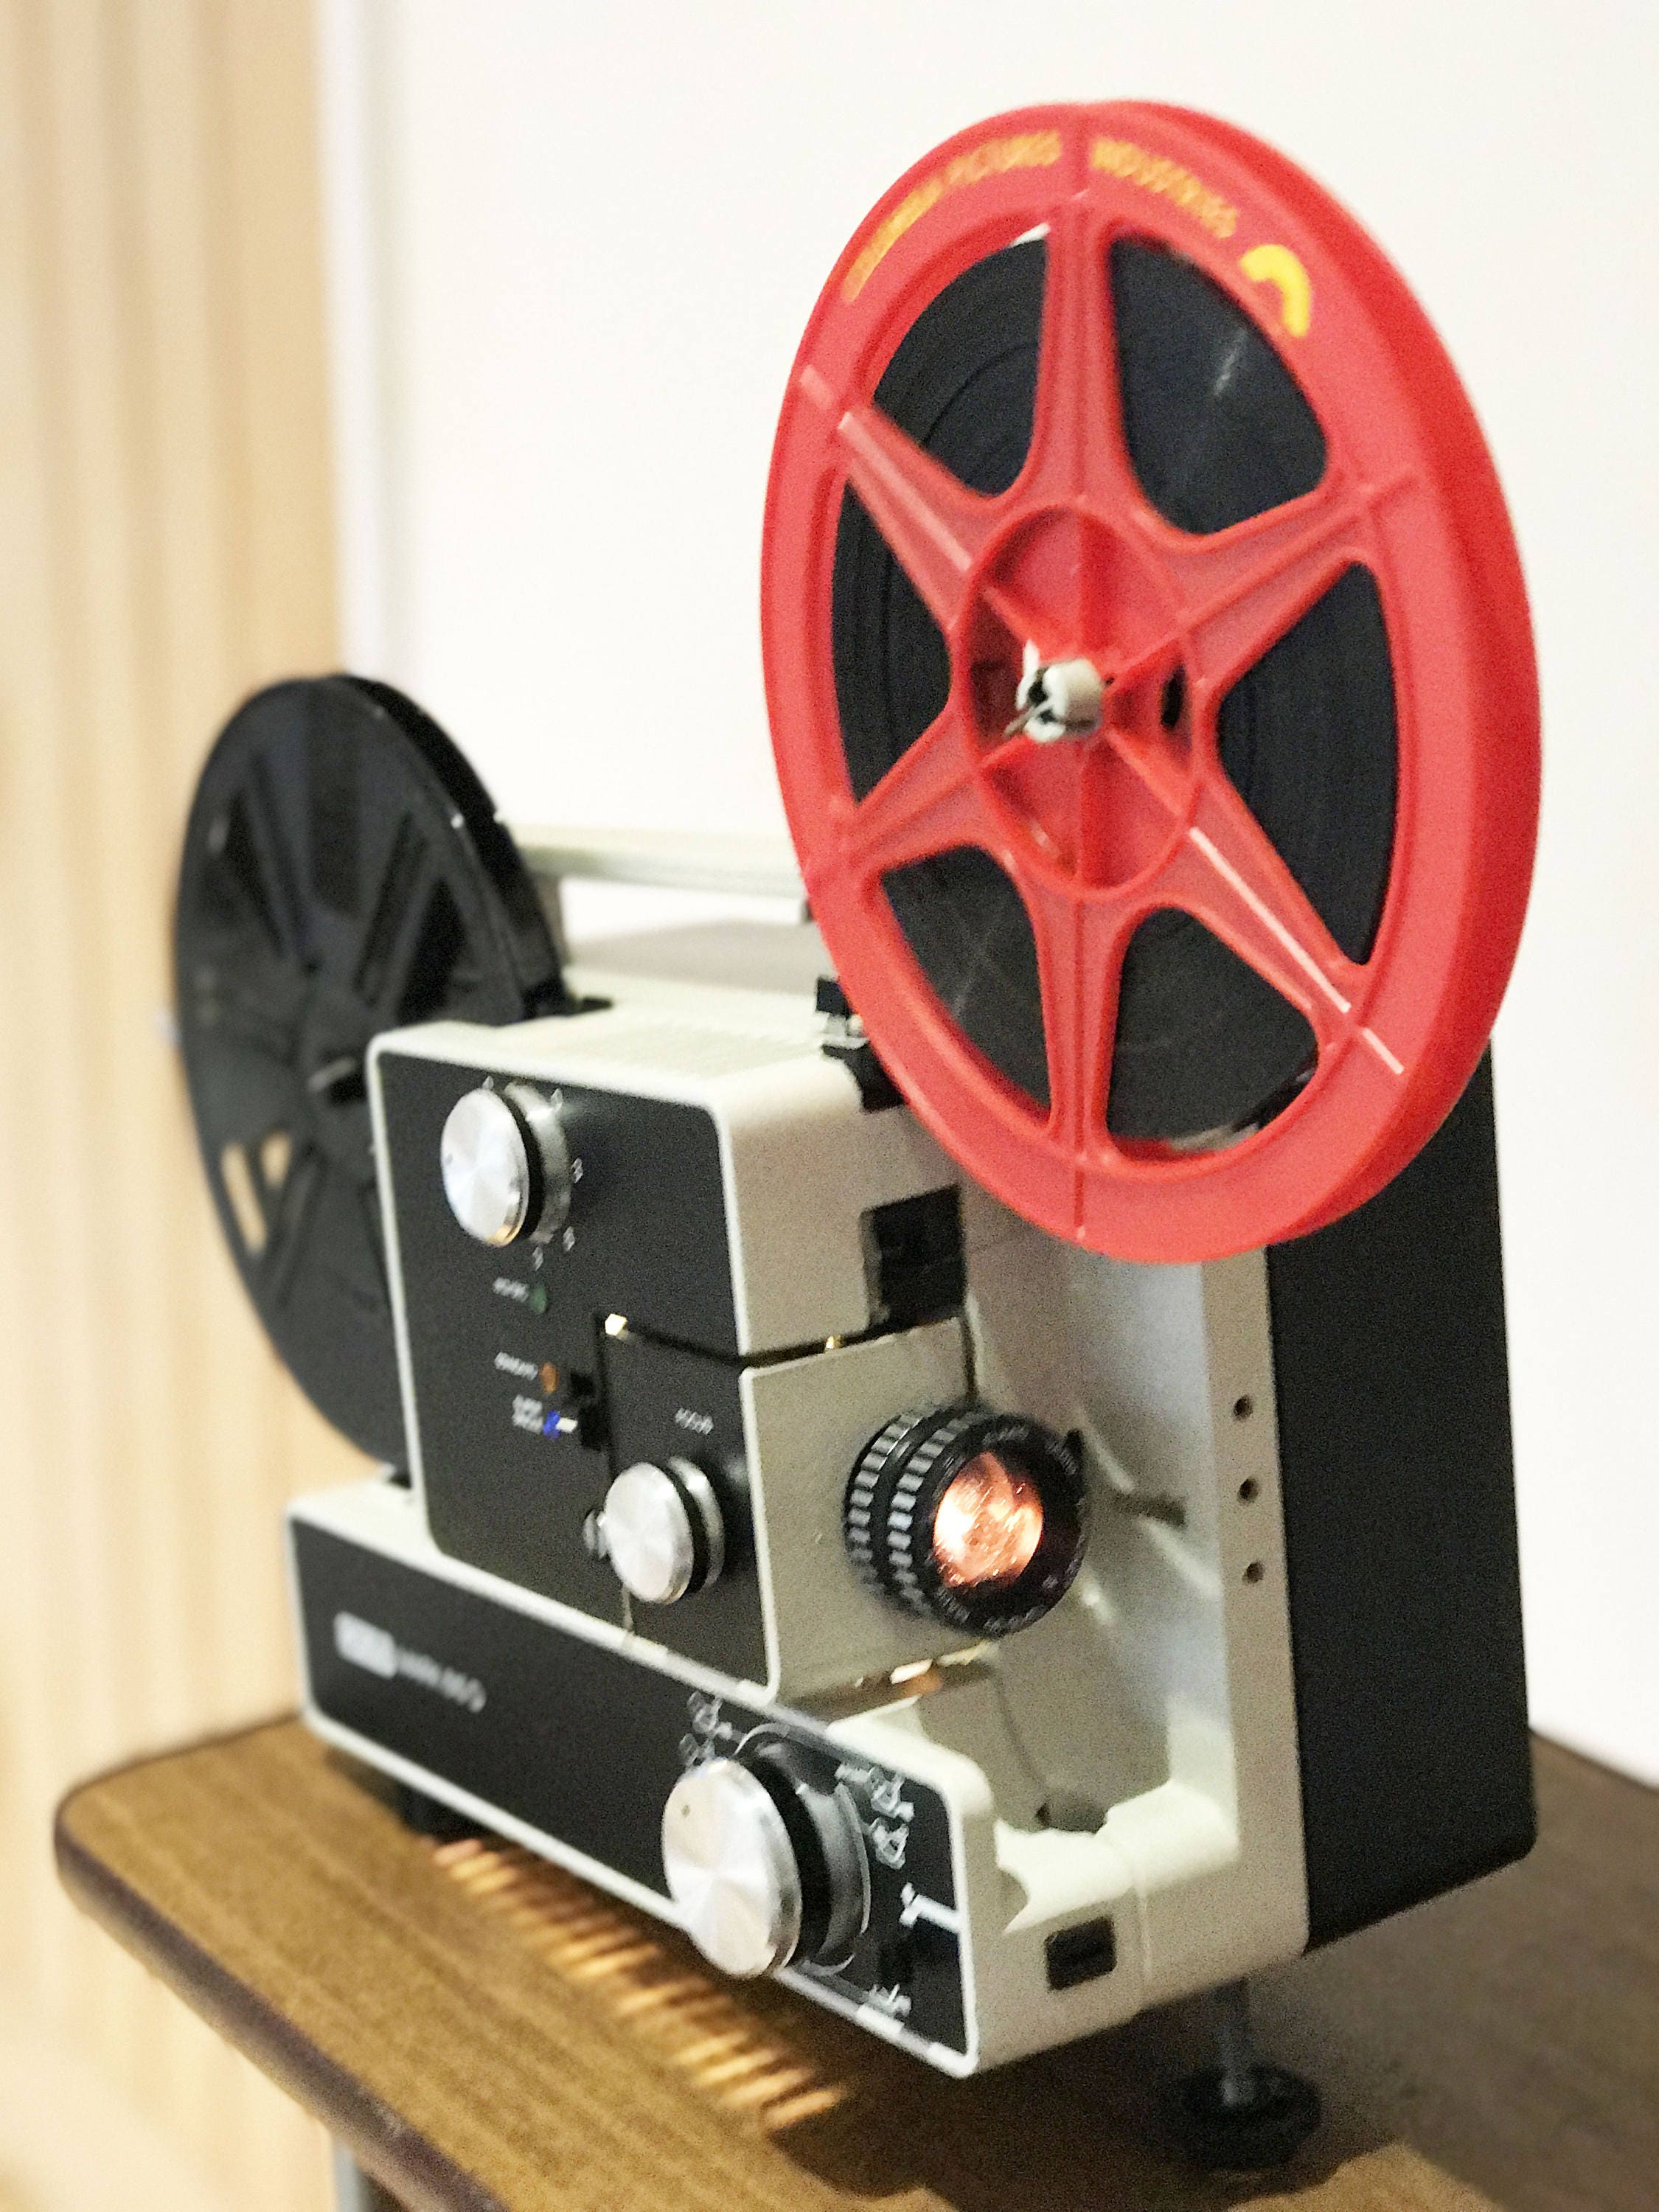 EUMIG 607D Super 8 Standard 8 Ciné Film Projecteur Entièrement entretenu -   Canada